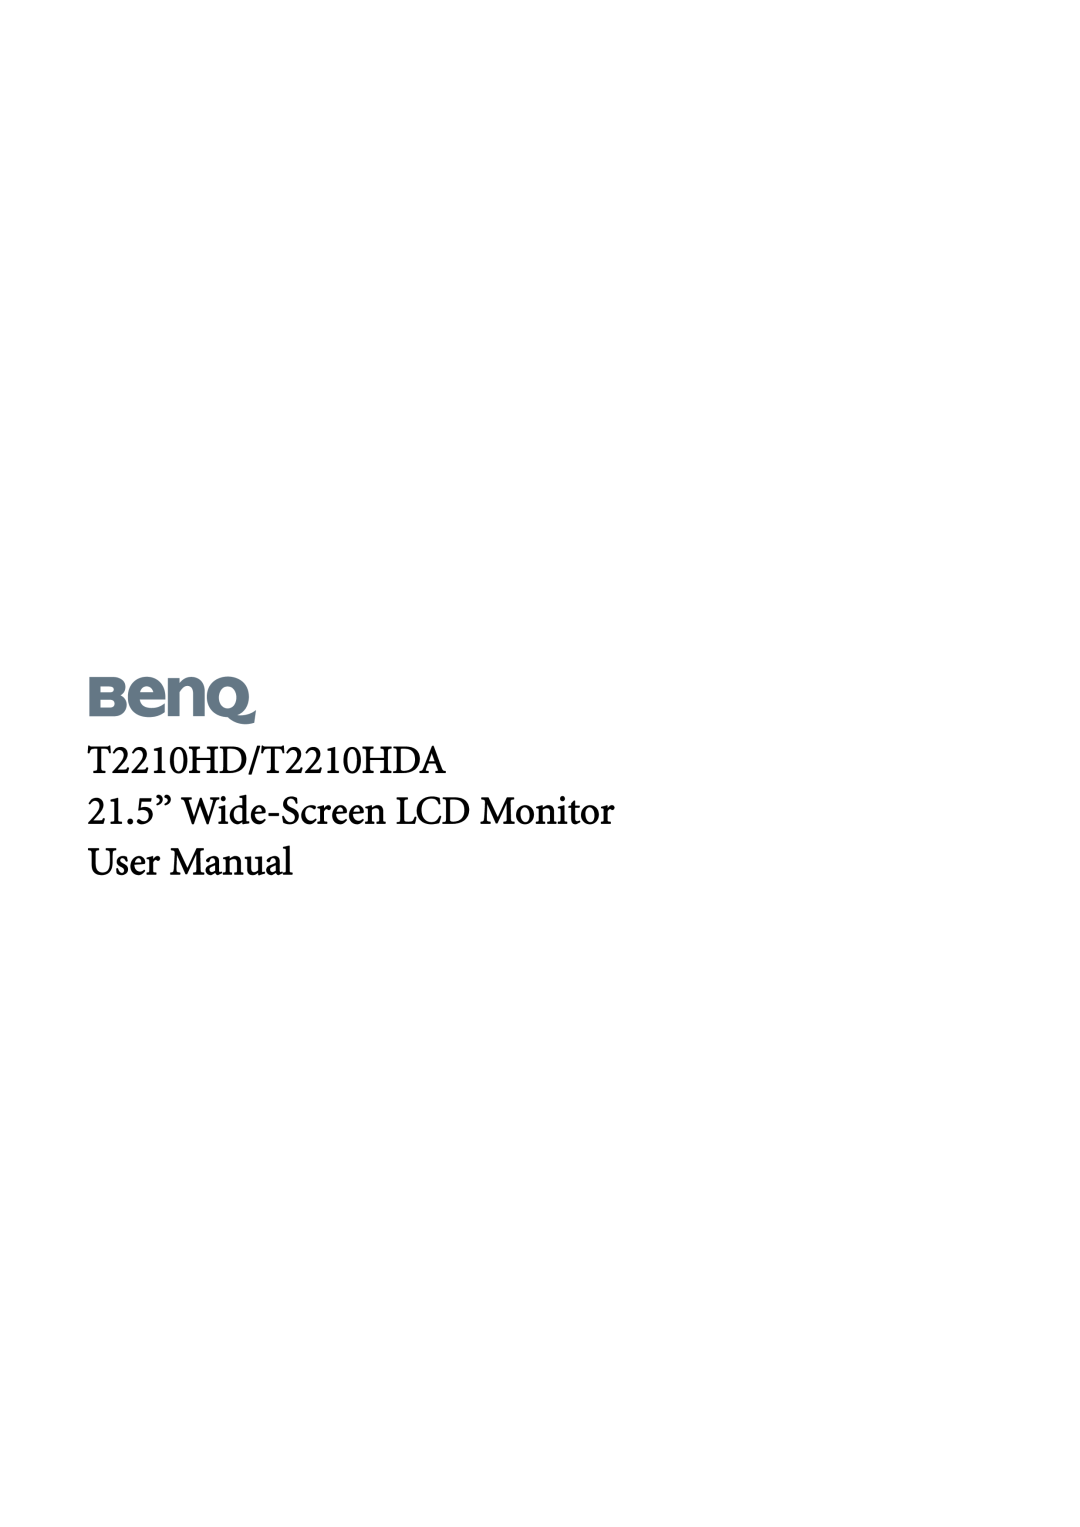 BenQ user manual T2210HD/T2210HDA 21.5’’ Wide-Screen LCD Monitor User Manual 